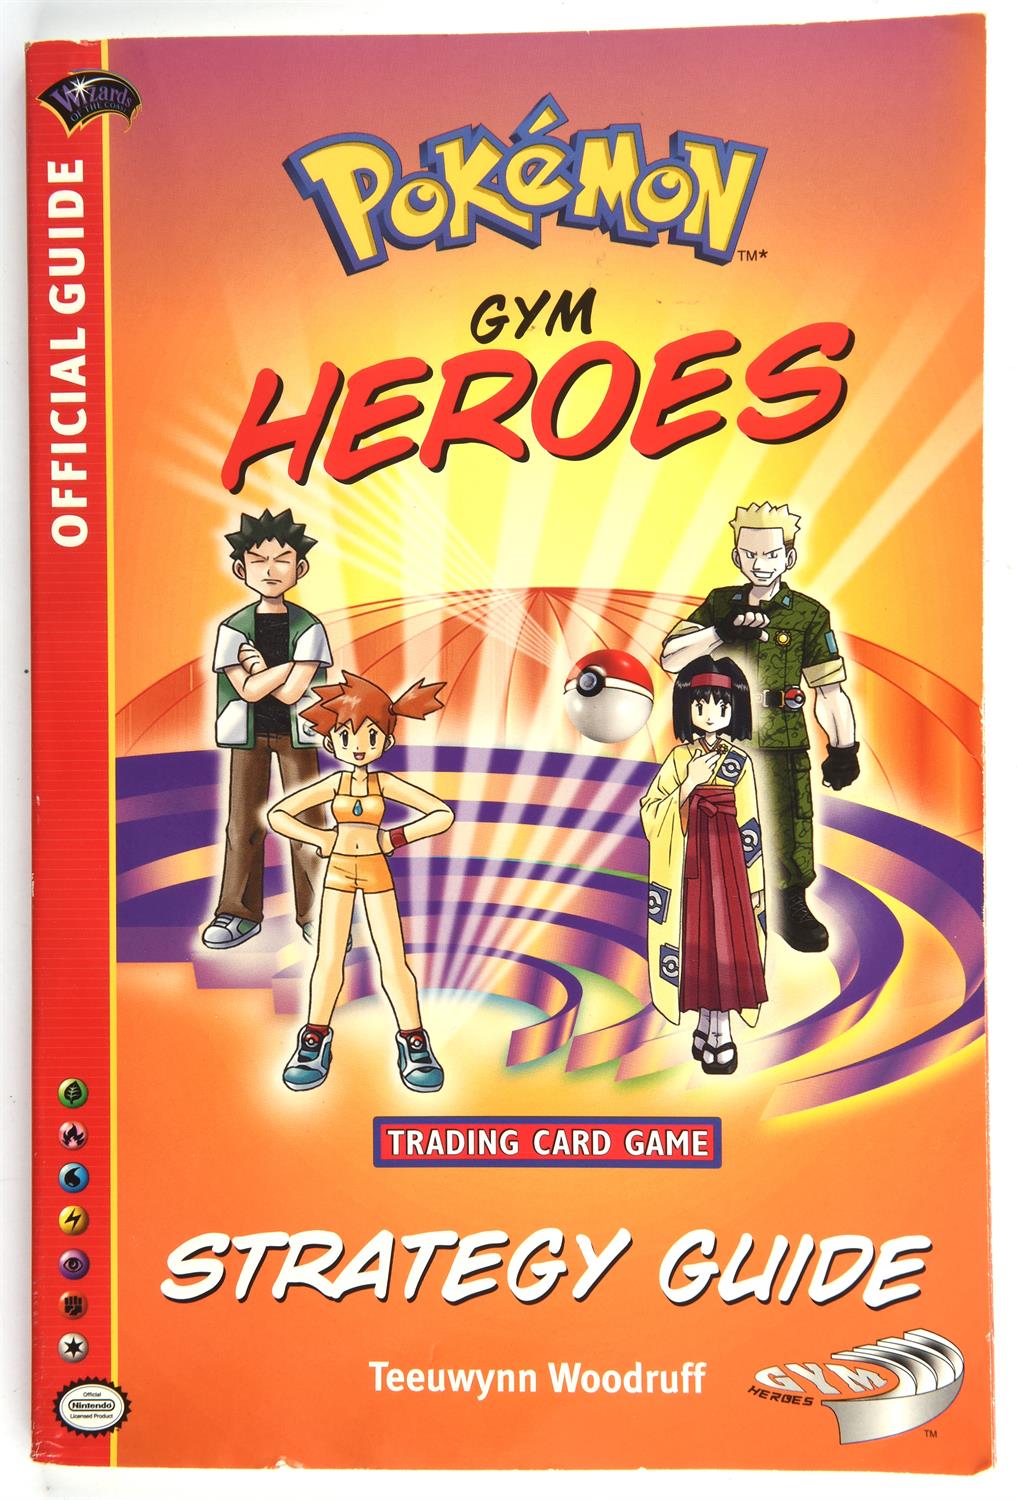 Pokemon TCG. Gym Heroes Wizards of the Coast Official Strategy Guide written by Teeuwynn Woodruff.